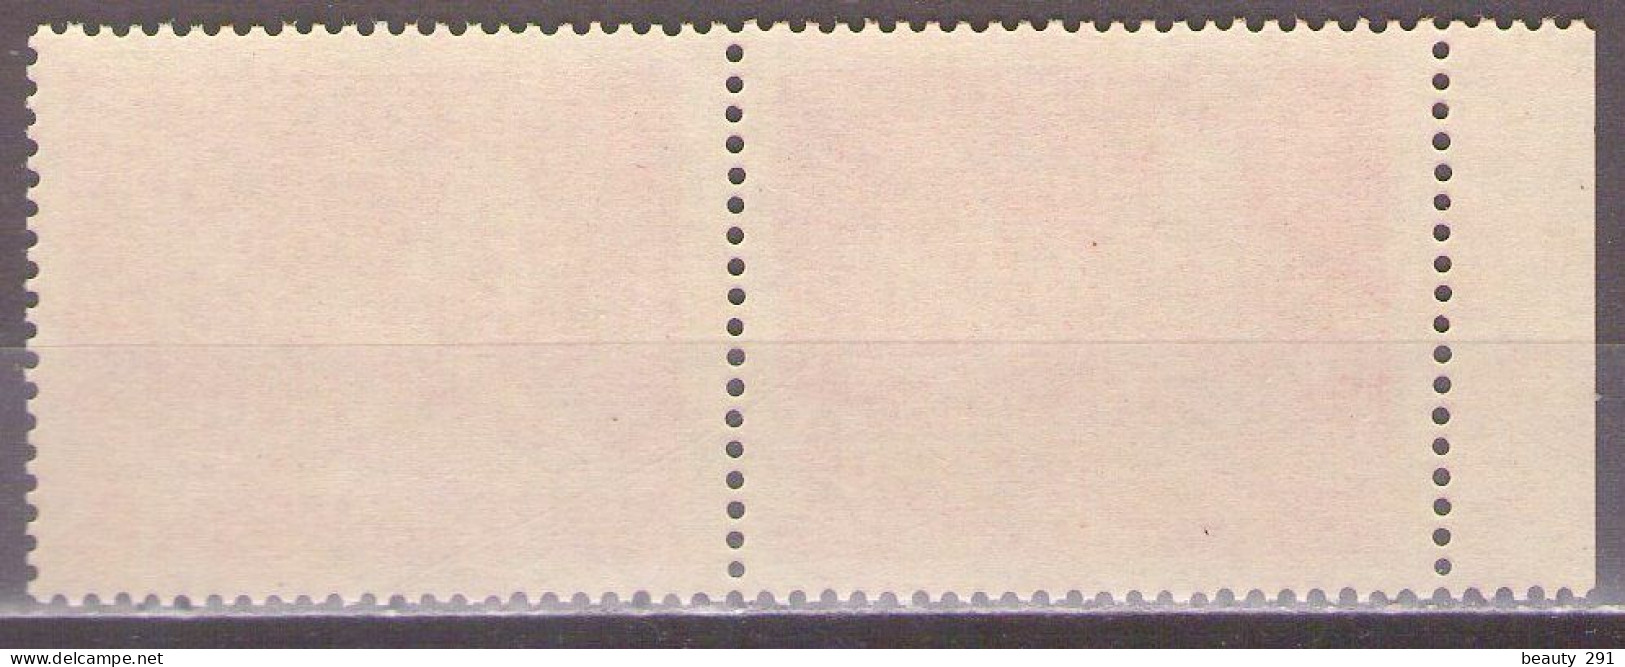 Yugoslavia 1951 - Children's Week - Mi 643 - MNH**VF - Unused Stamps